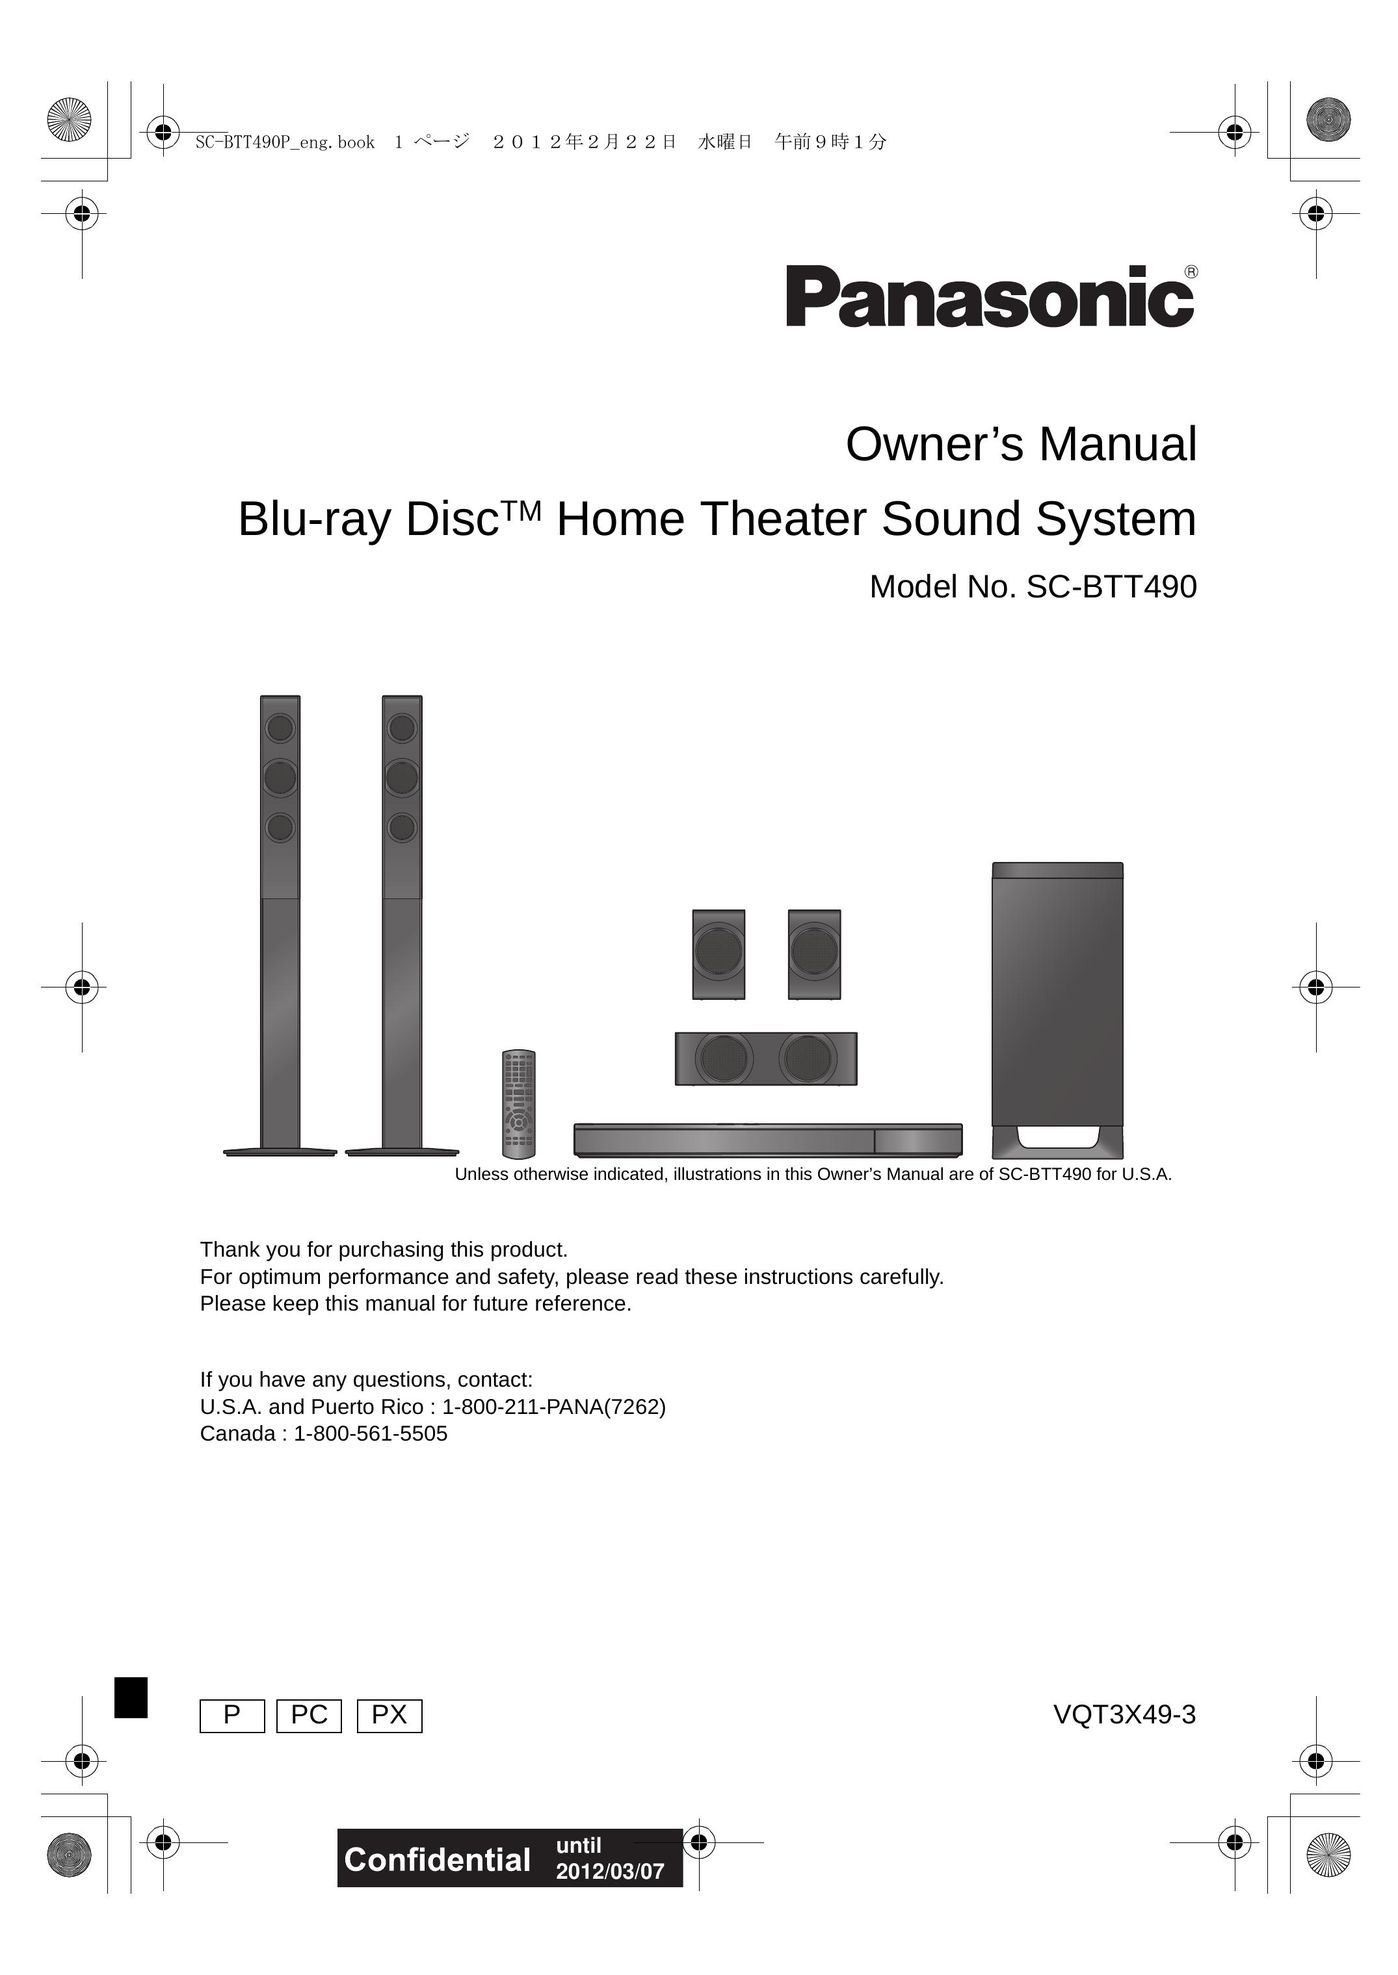 Panasonic SC-BTT490 Home Theater System User Manual